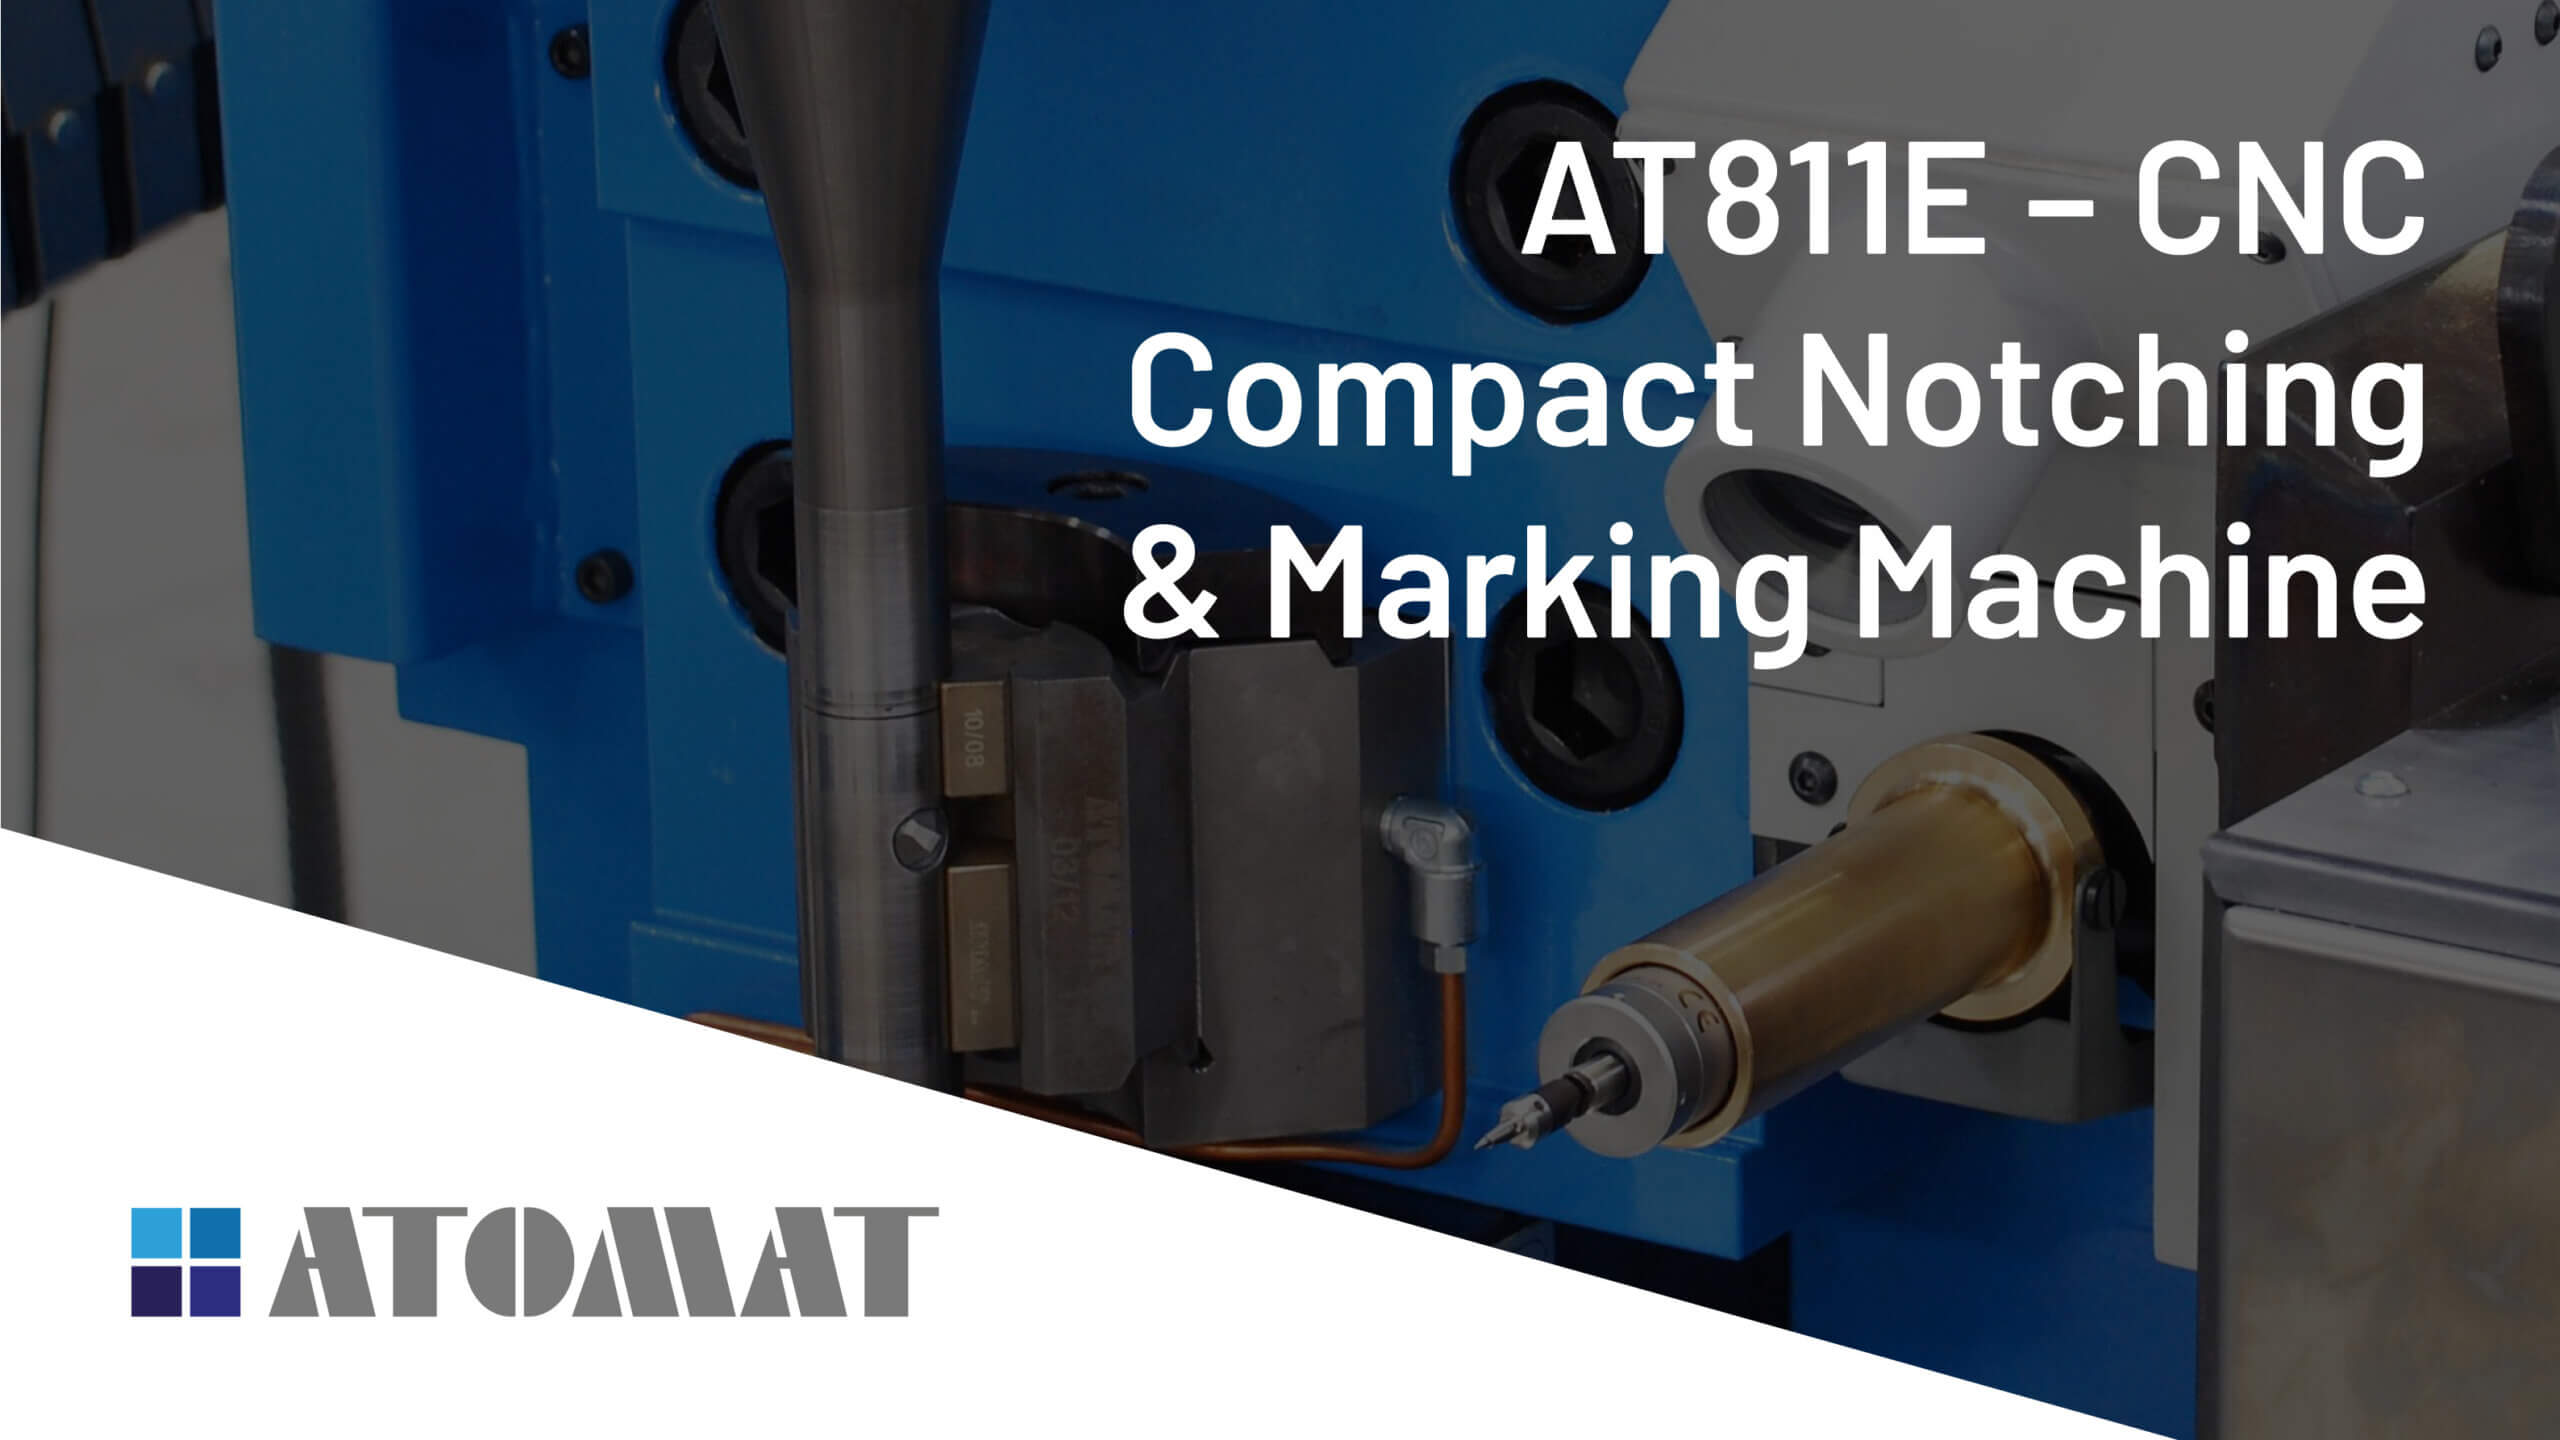 AT811E - CNC Compact Notching & Marking Machine